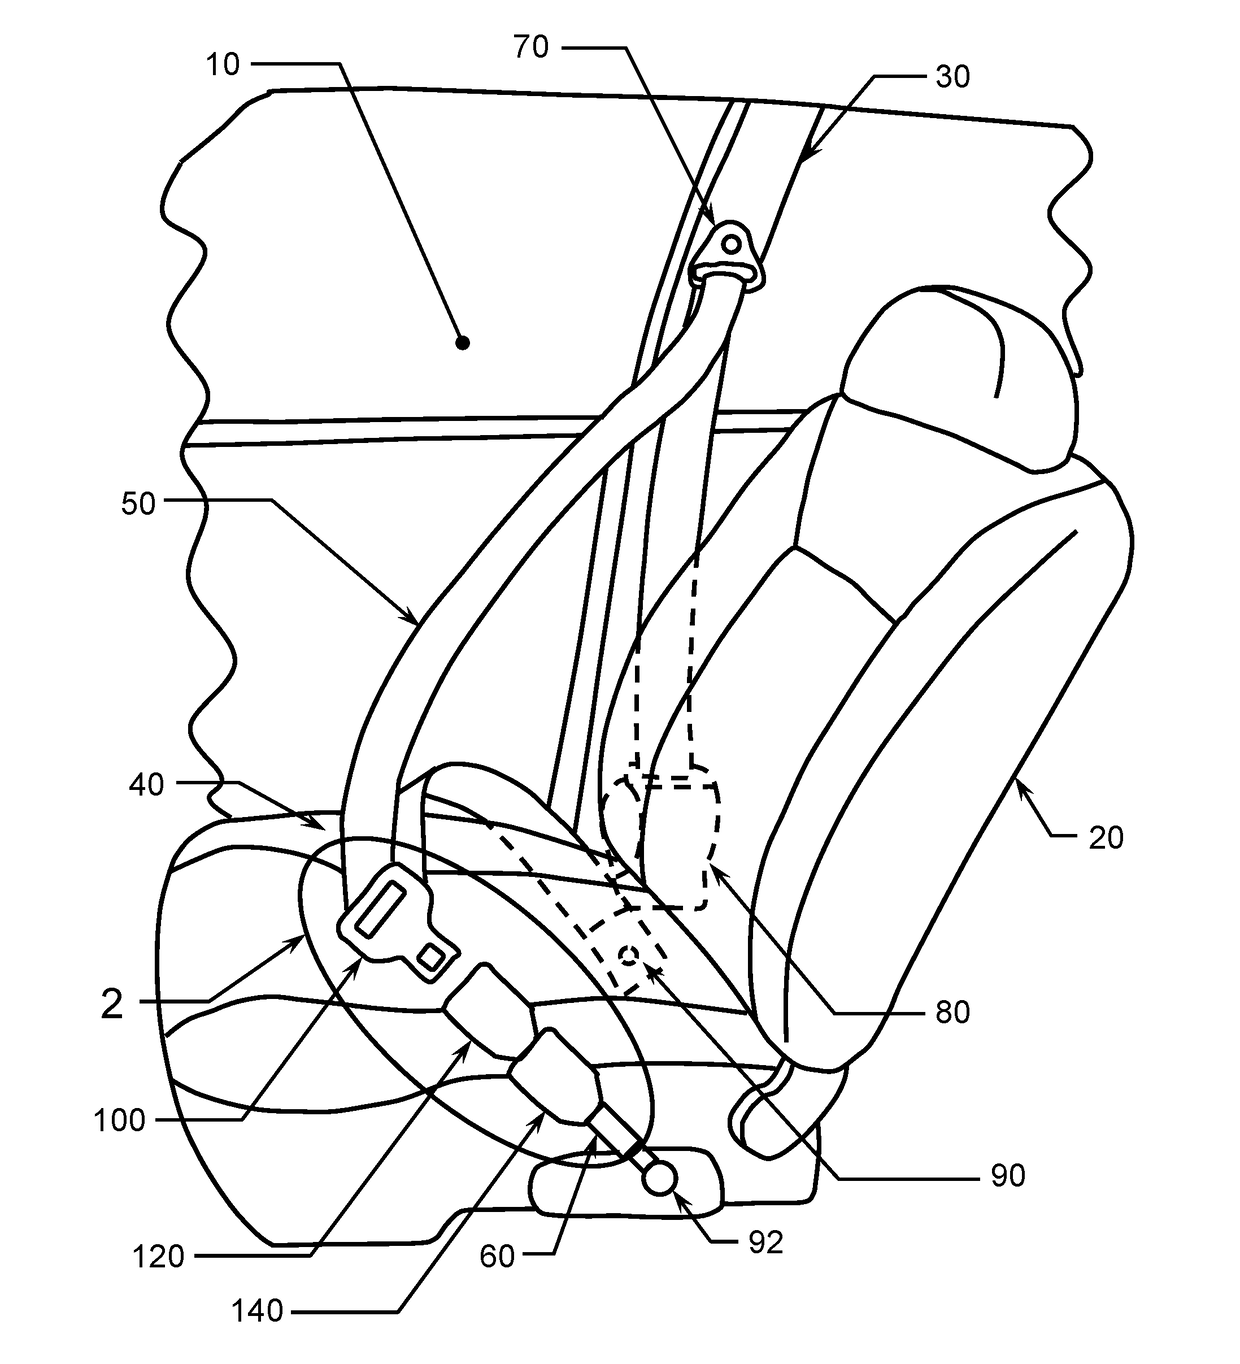 Resettable Load-Limiting Adaptive Seatbelt Apparatus